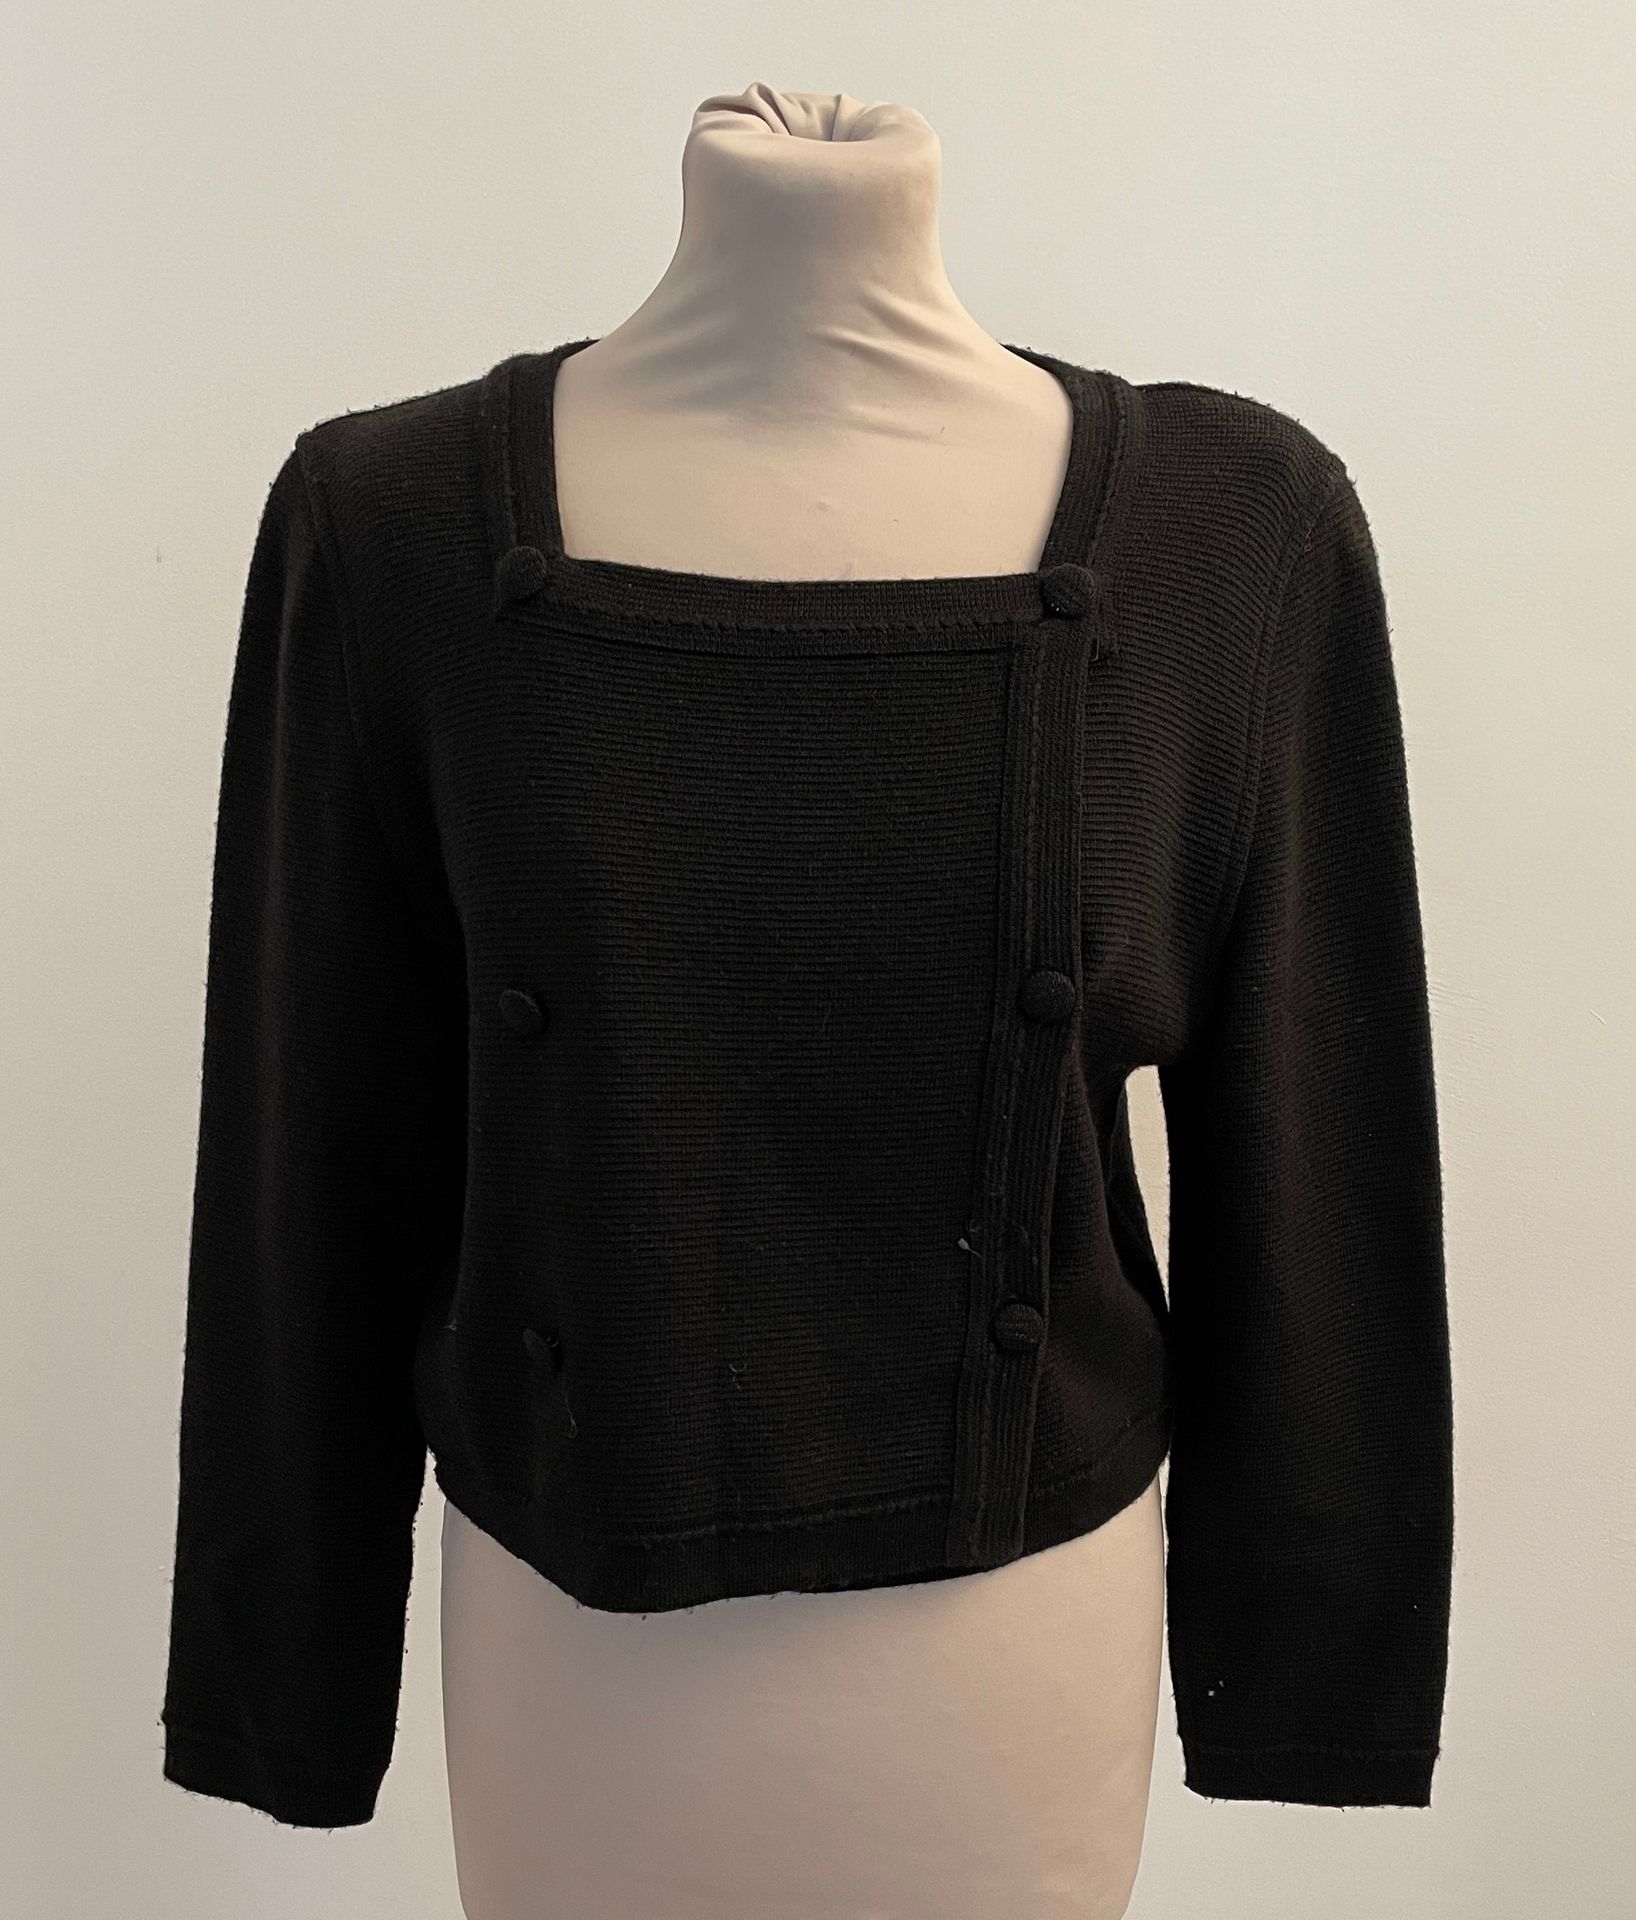 Null 罗迪尔

黑色羊毛和腈纶开衫。

T.42

肩宽40，袖长56厘米，衣领至衣底高度47厘米